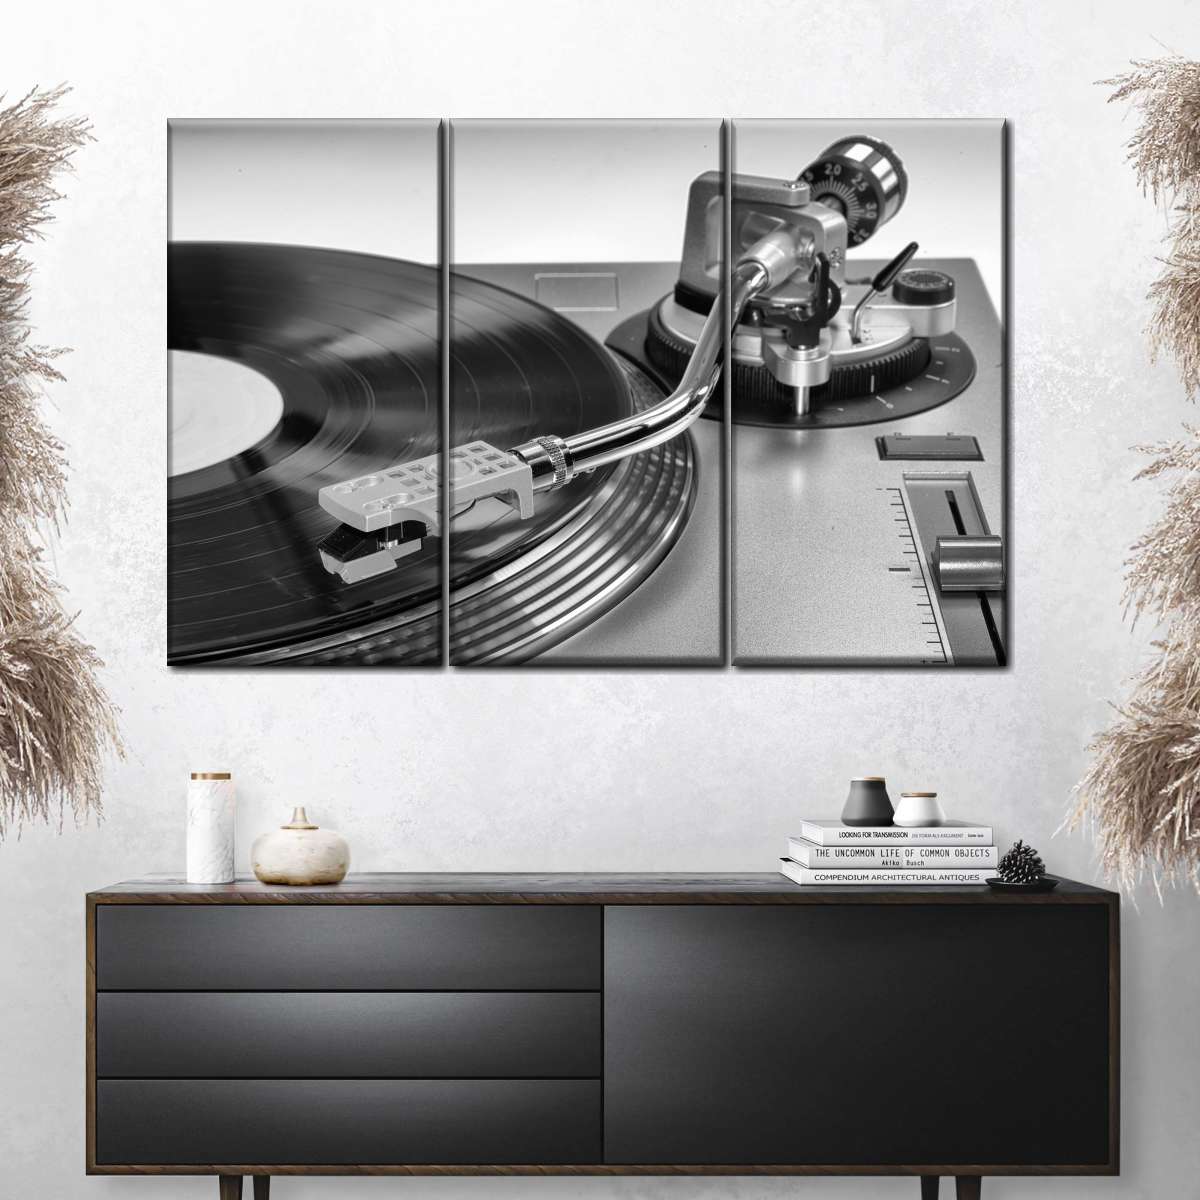 Vinyl Living Room Decor, Record Wall Picture, Vinyl Record Poster